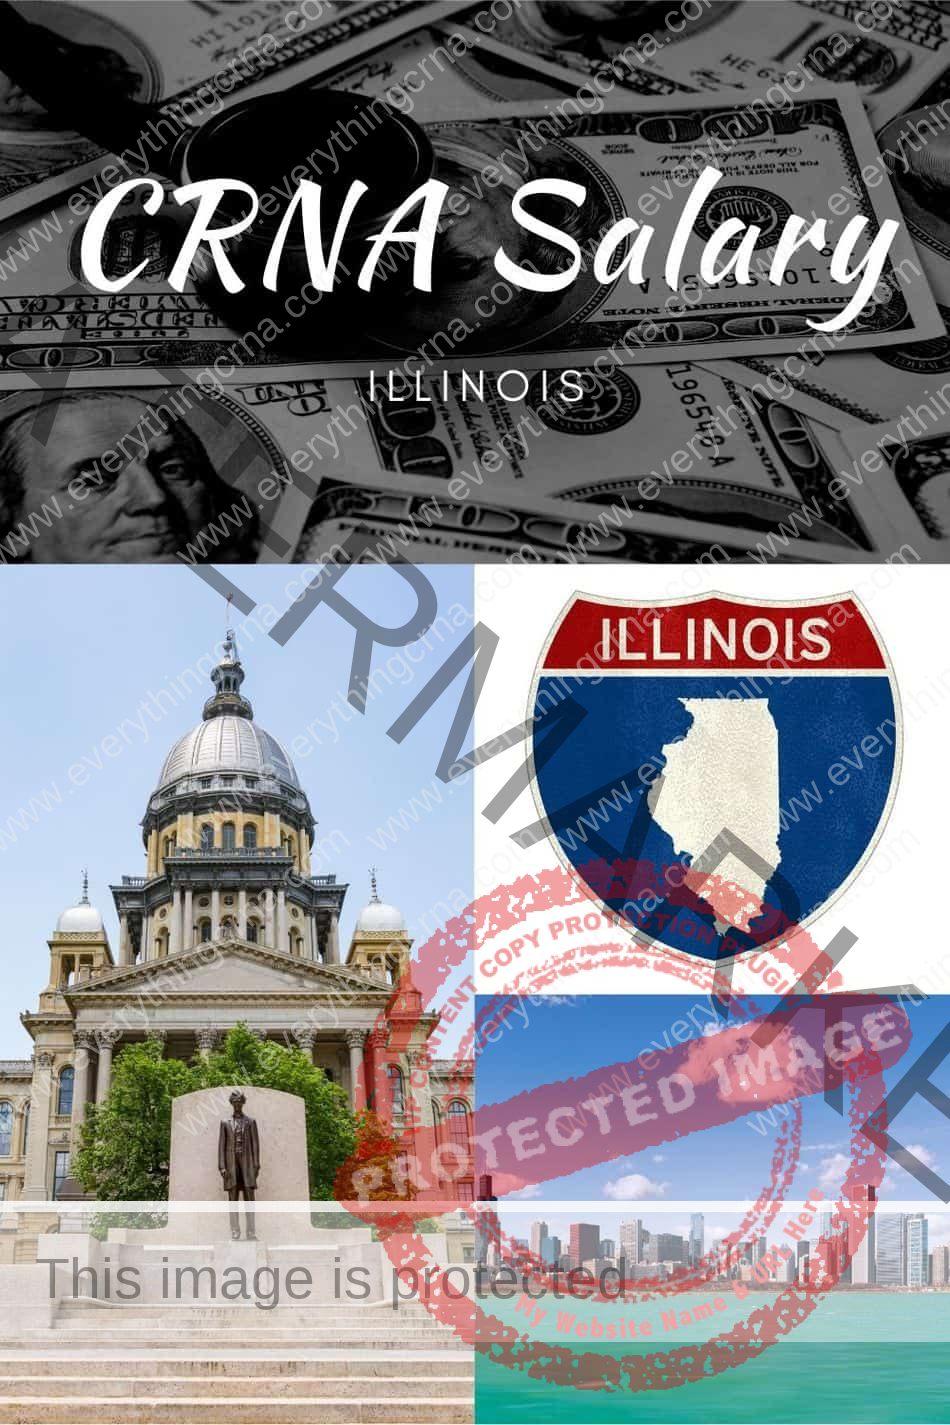 CRNA Salary in Illinois